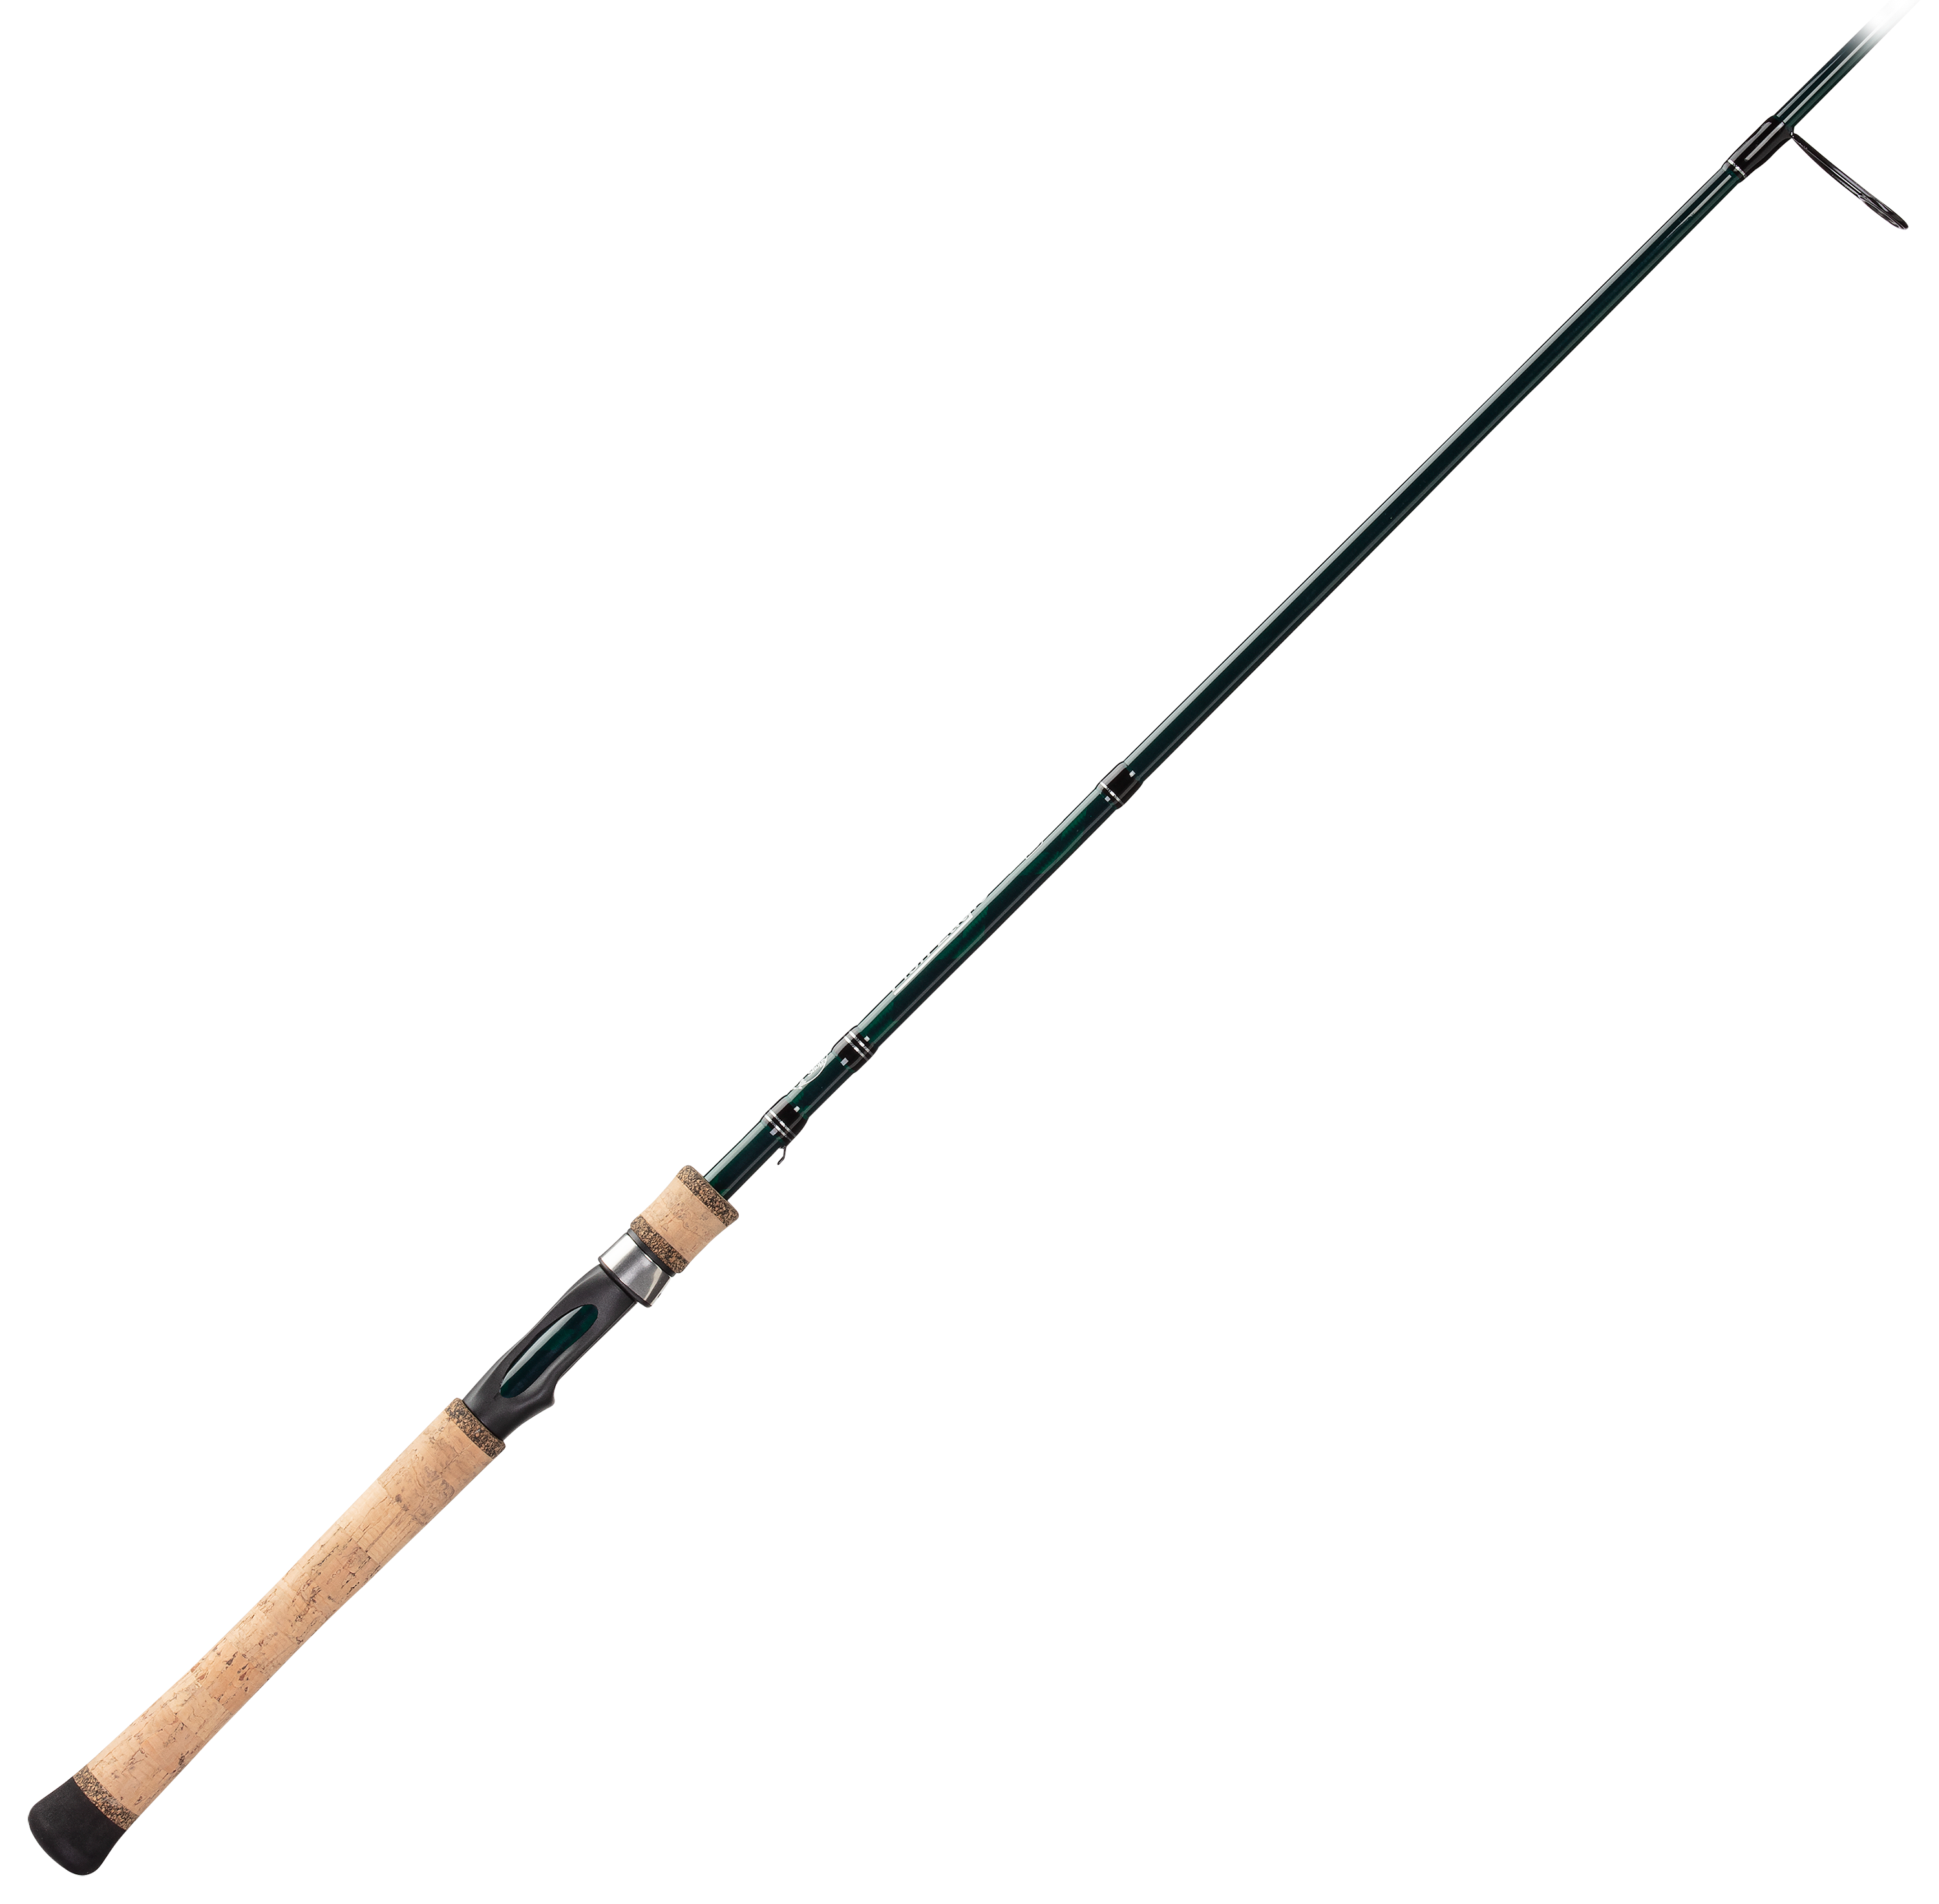 Bass Pro Shops Fish Eagle Travel Spinning Rod - 6'6 - Medium